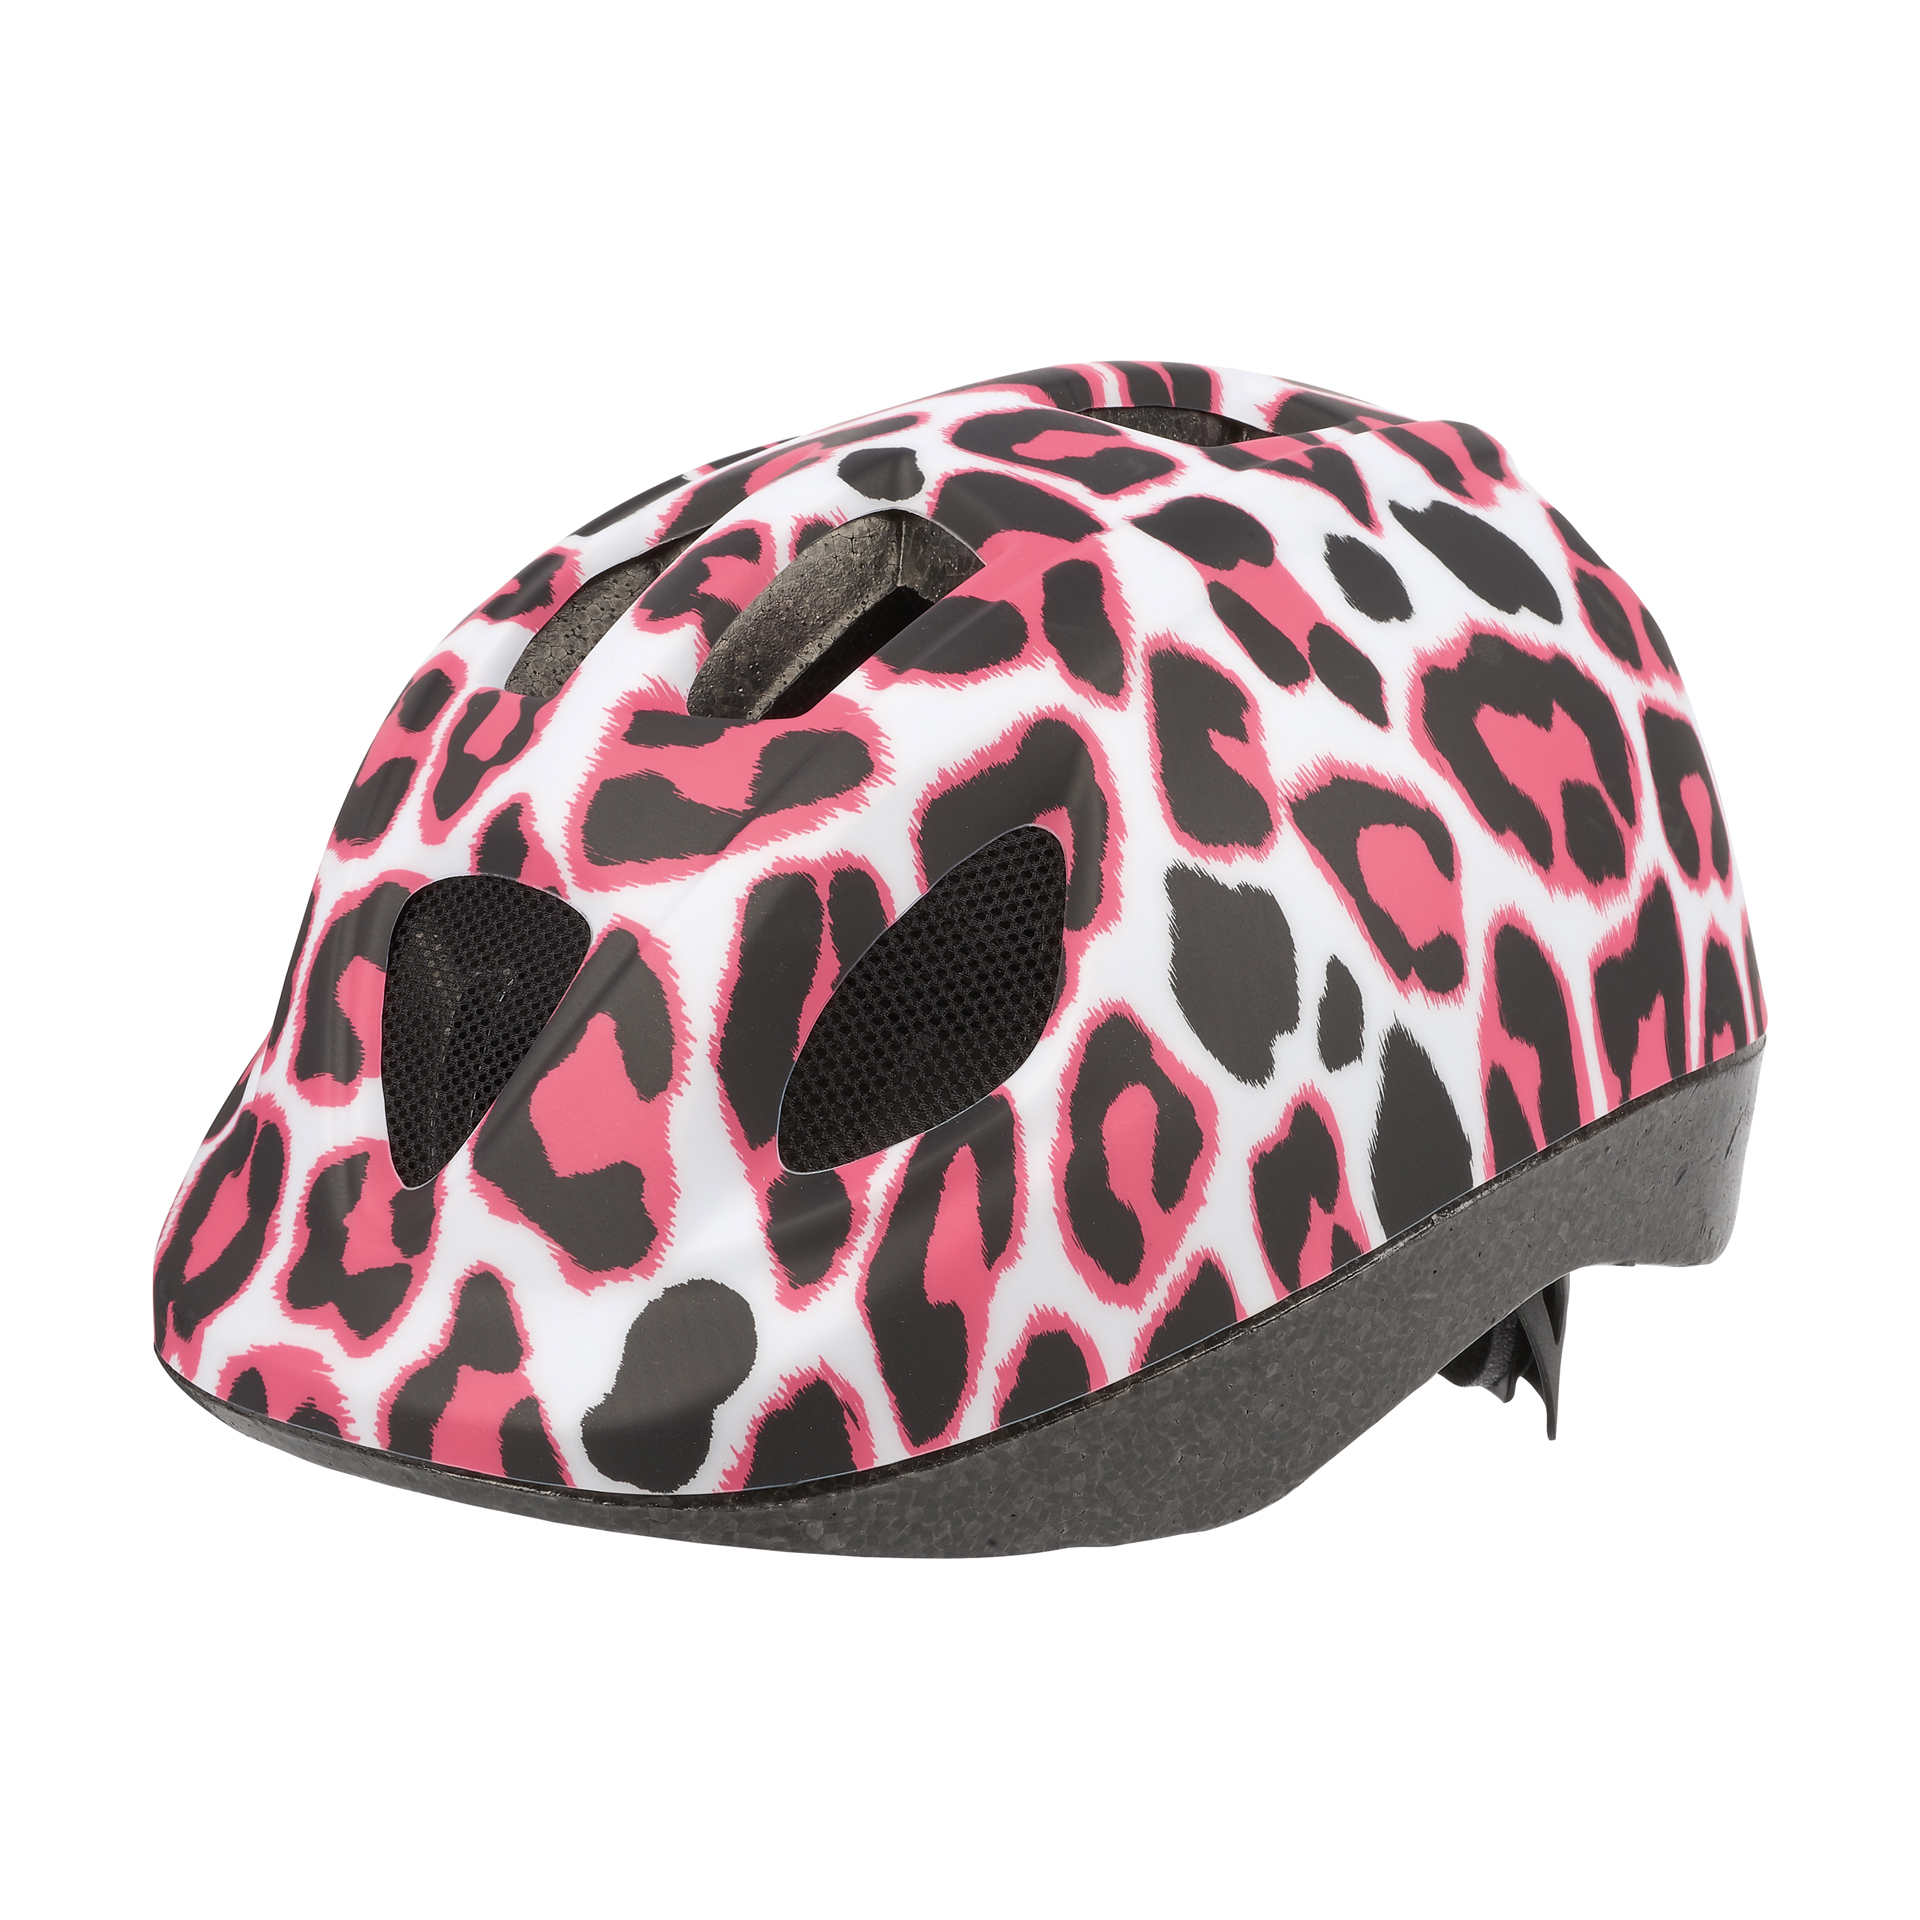 Polisport Polisport Kinder Helm Pinky Cheetah 46/53cm wit/roze 5010668